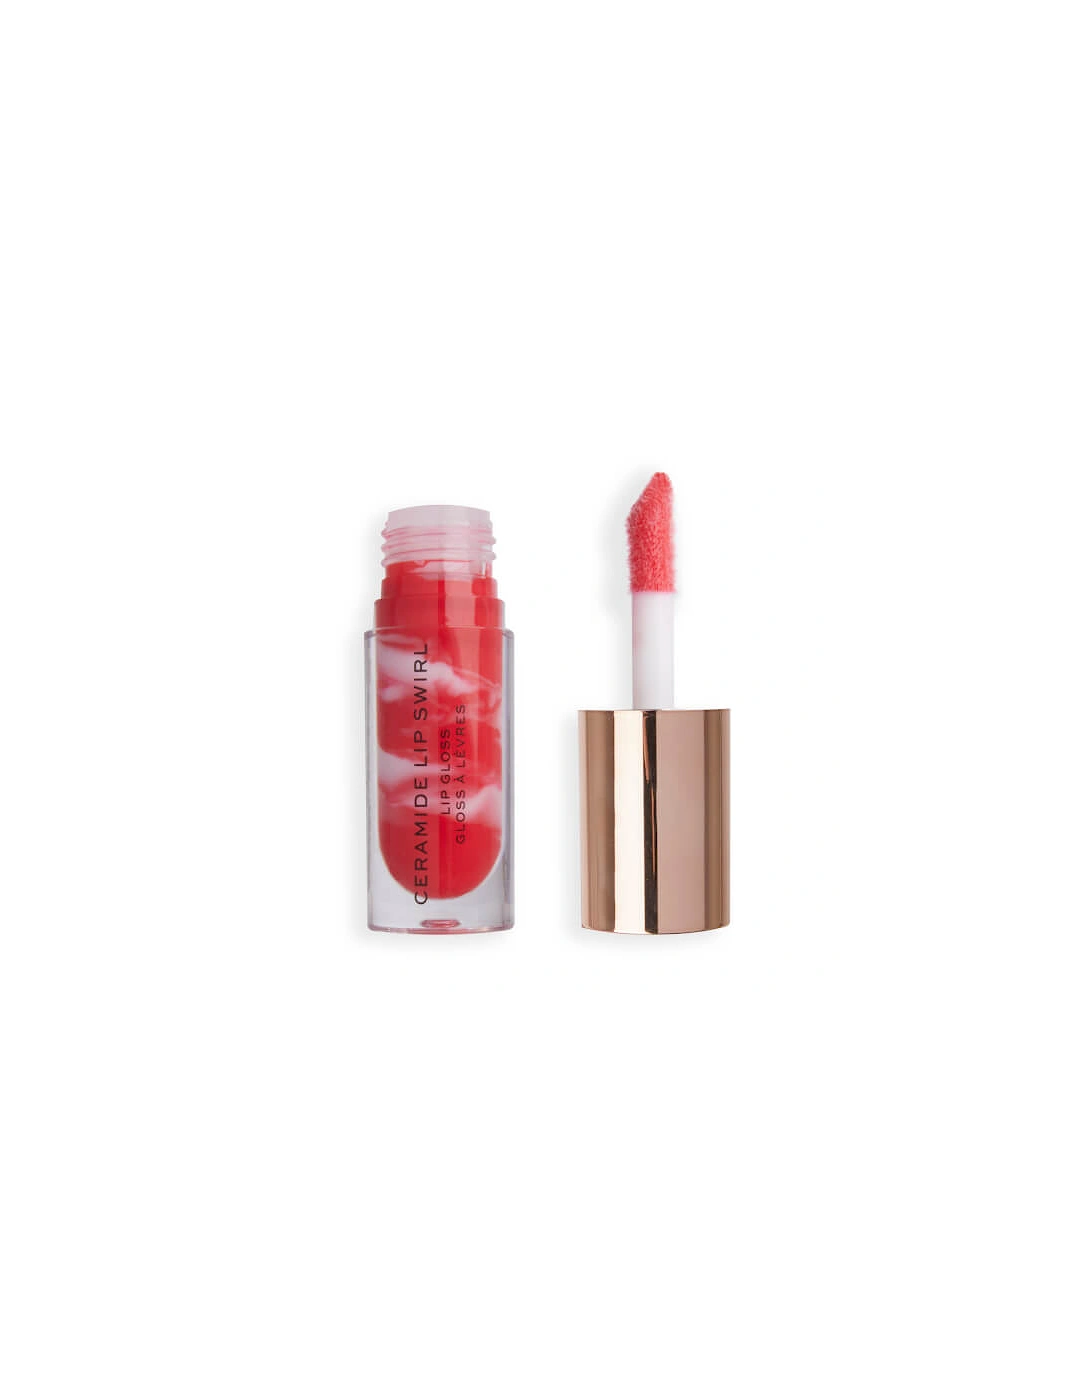 Makeup Lip Swirl Ceramide Gloss - Bitten Red, 2 of 1